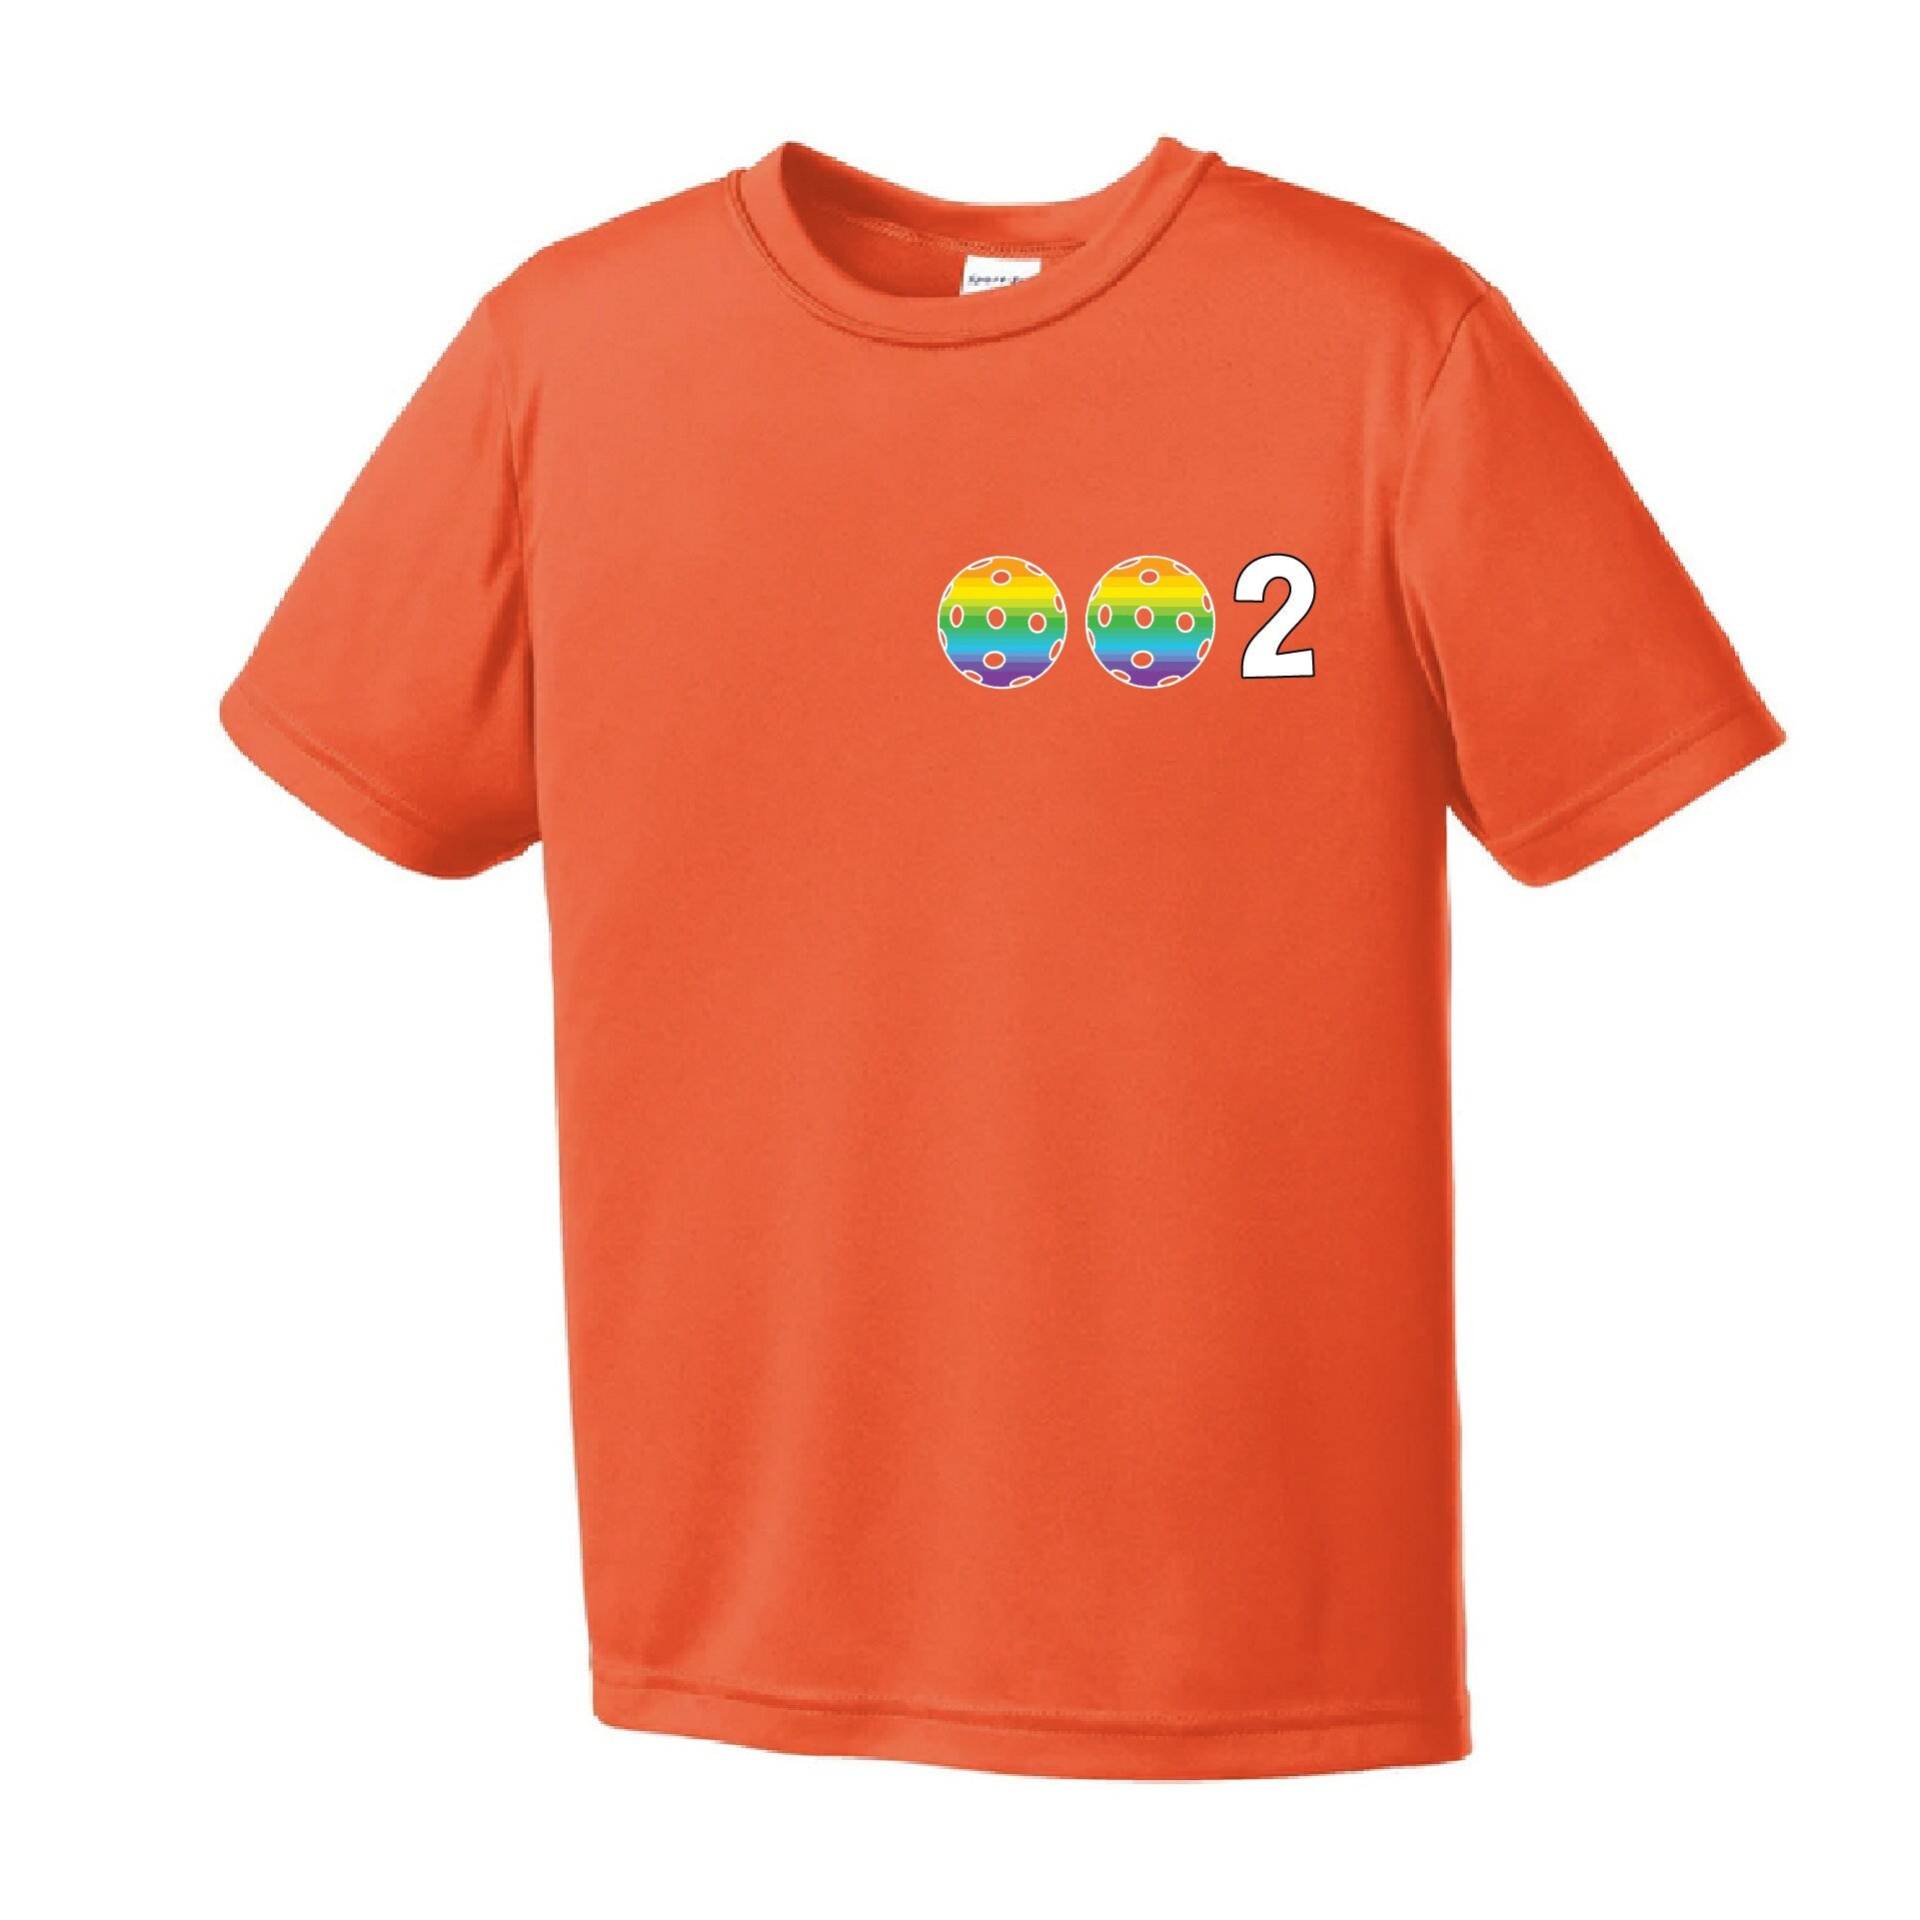 Jugend 002 Balls Pickleball T-Shirts...junior Shirts...jugend Sport Shirts...spaß Shirts Für Kinder von DinkDinkSmash